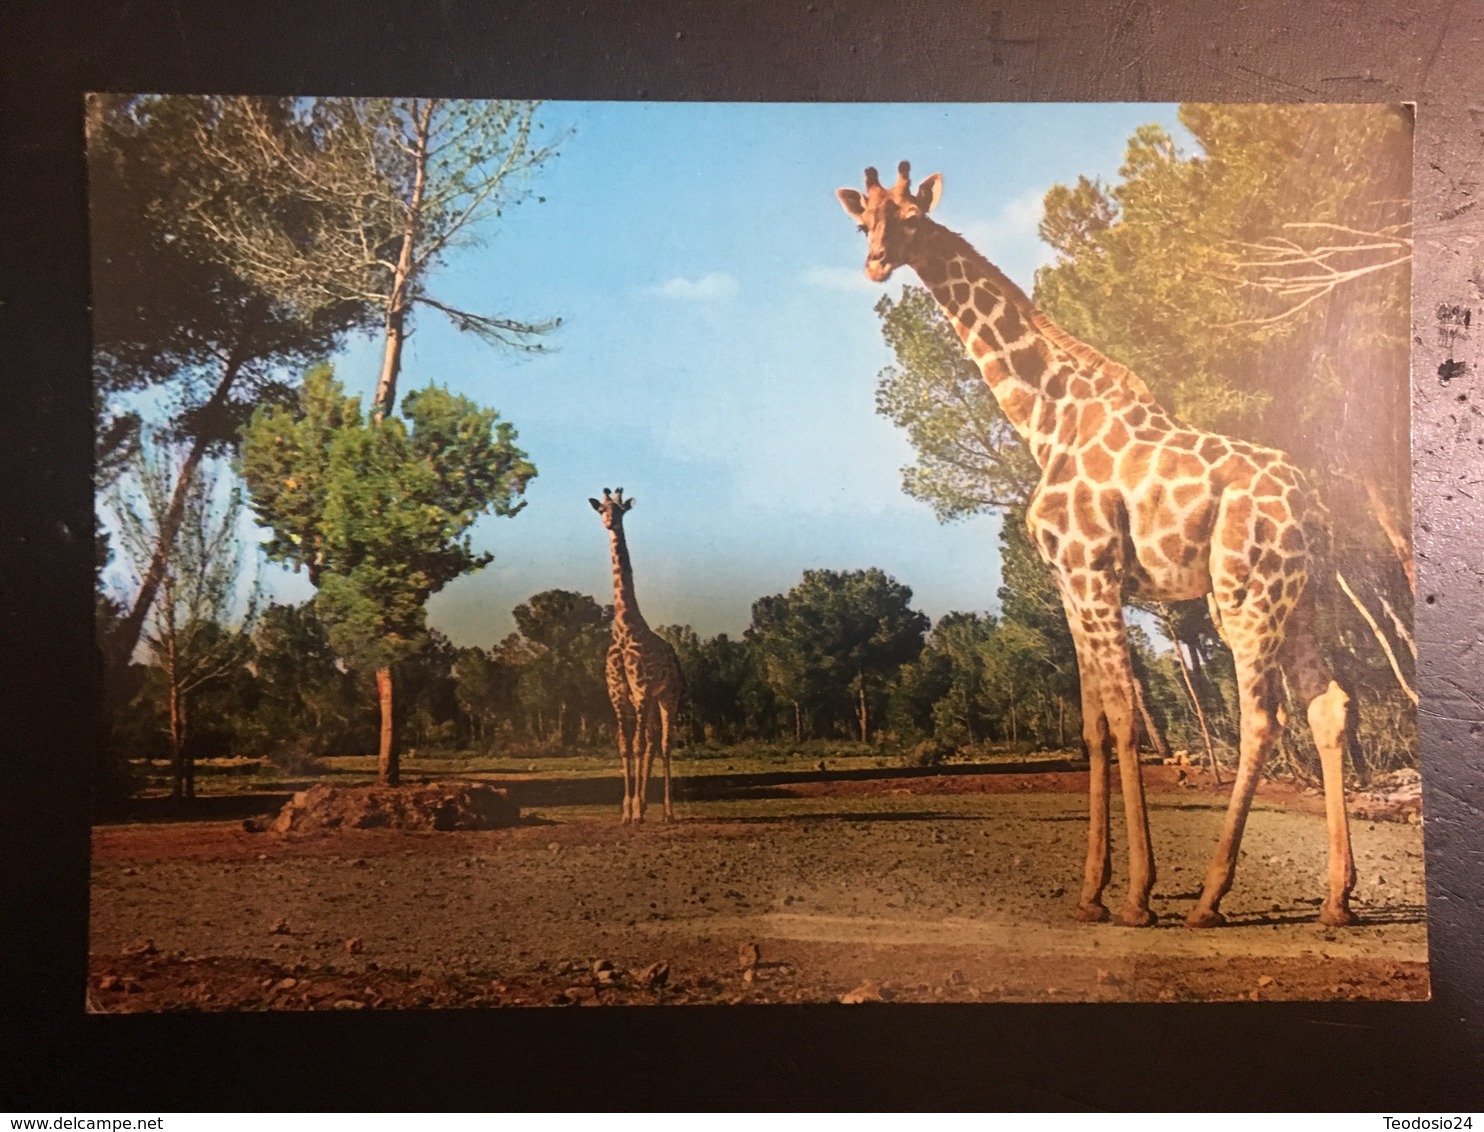 Jirafas - Giraffes